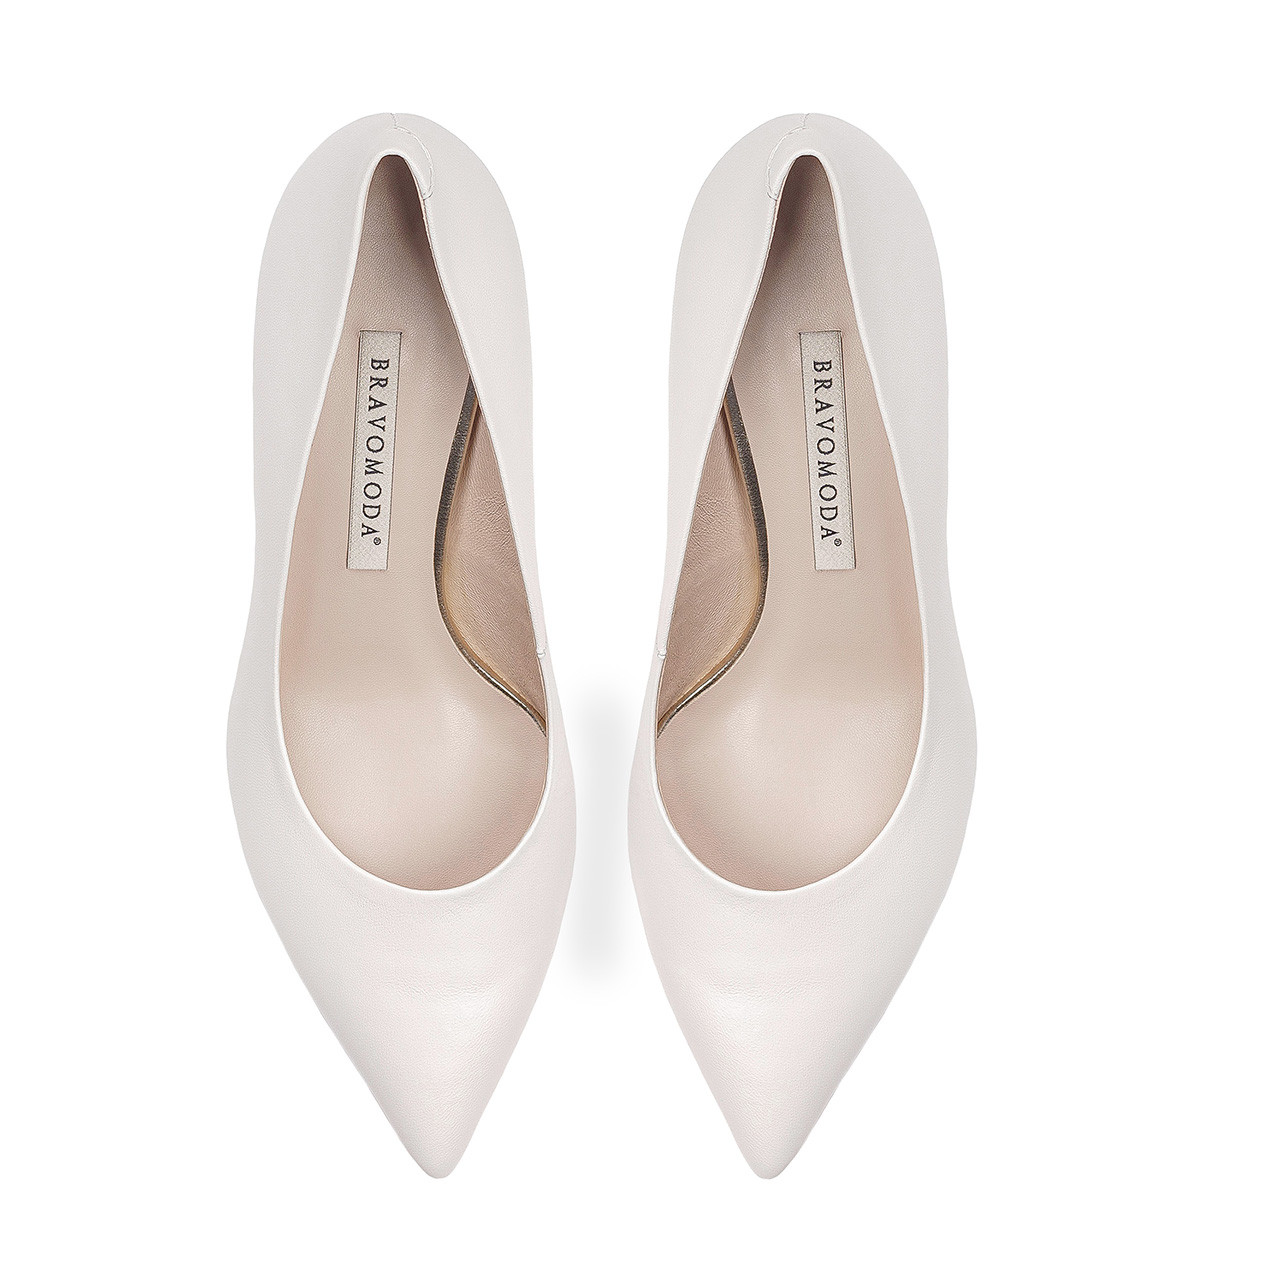 Leather Pumps - white 1-1-22402-28-101: Buy Tamaris High heels online!